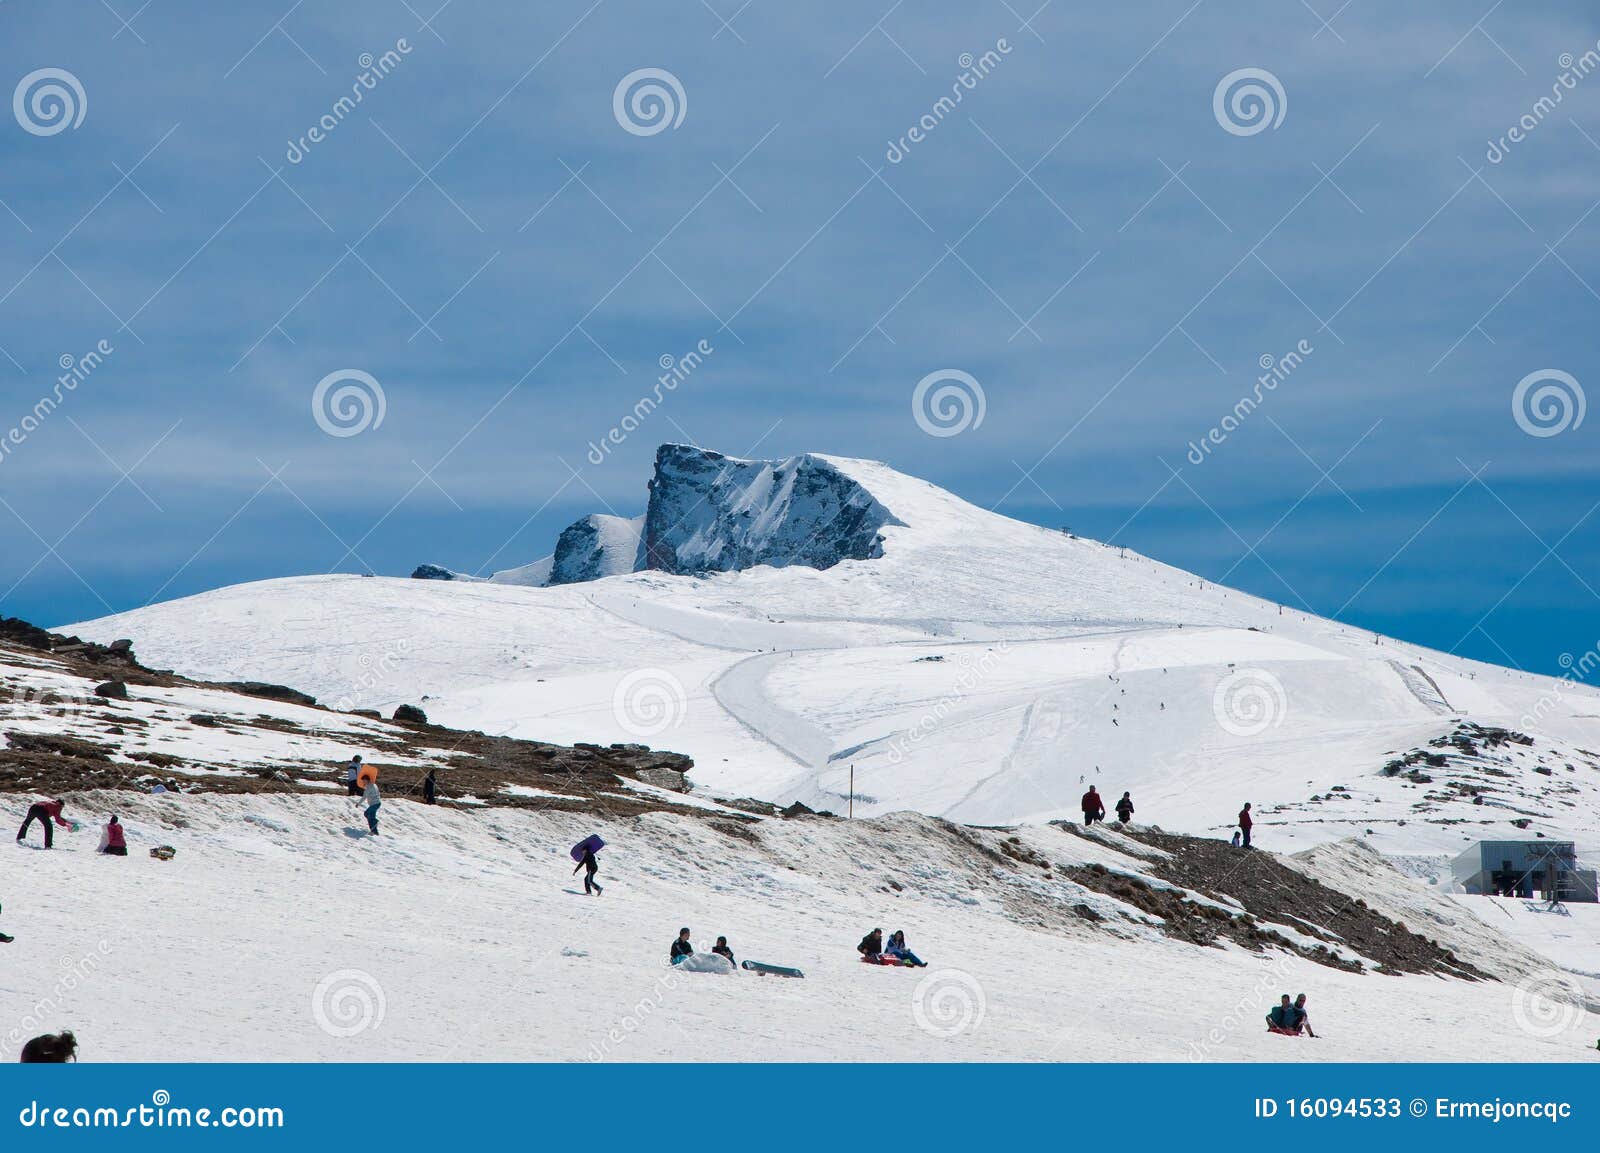 top of a mountain called veleta in sierra nevada